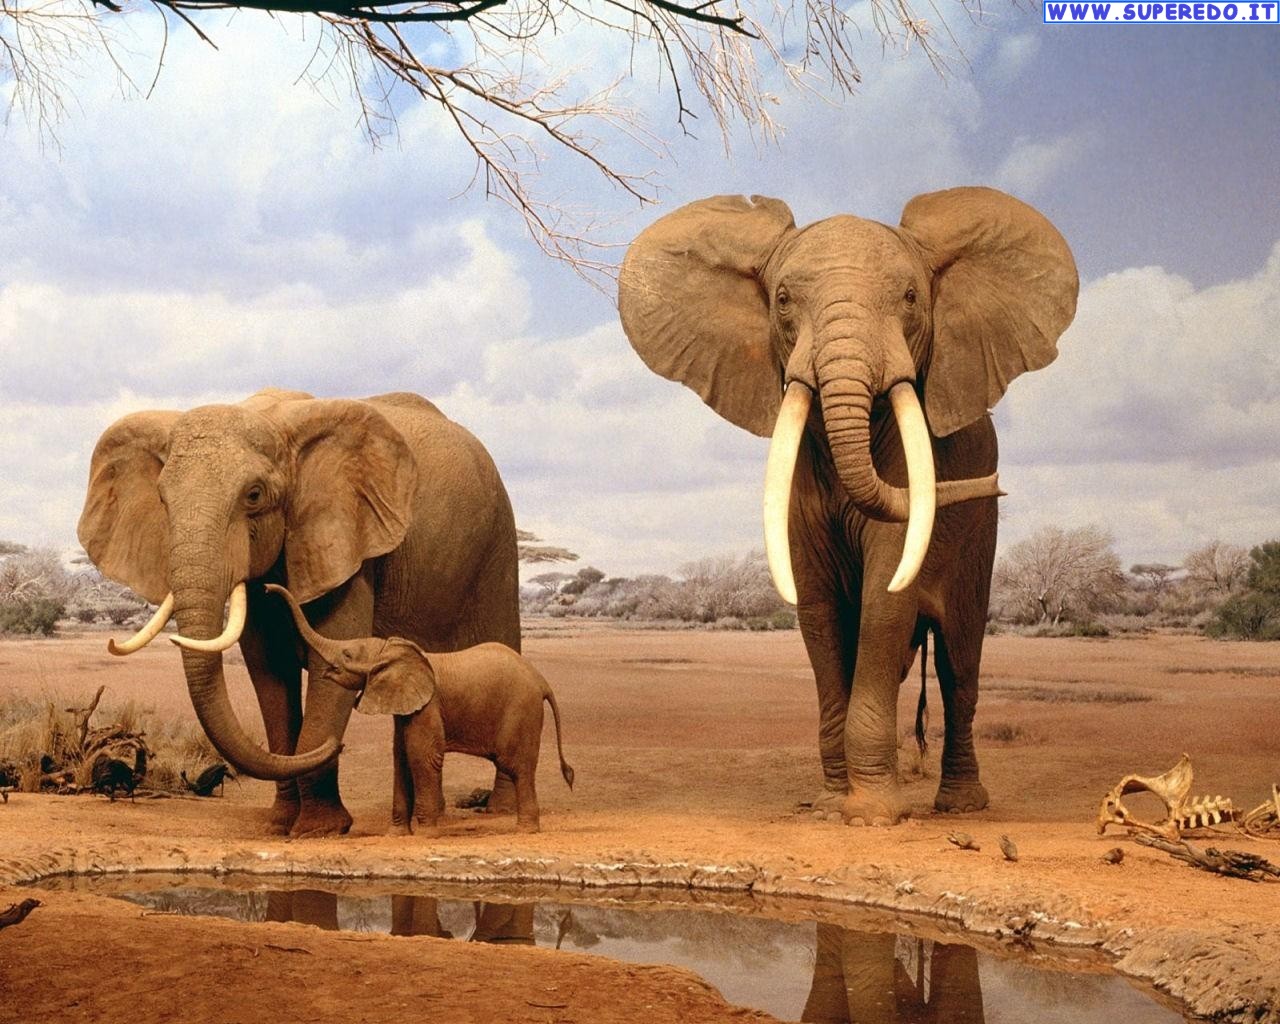 Zimbabwe è strage di elefanti ad ottobre avvelenati 62 esemplari